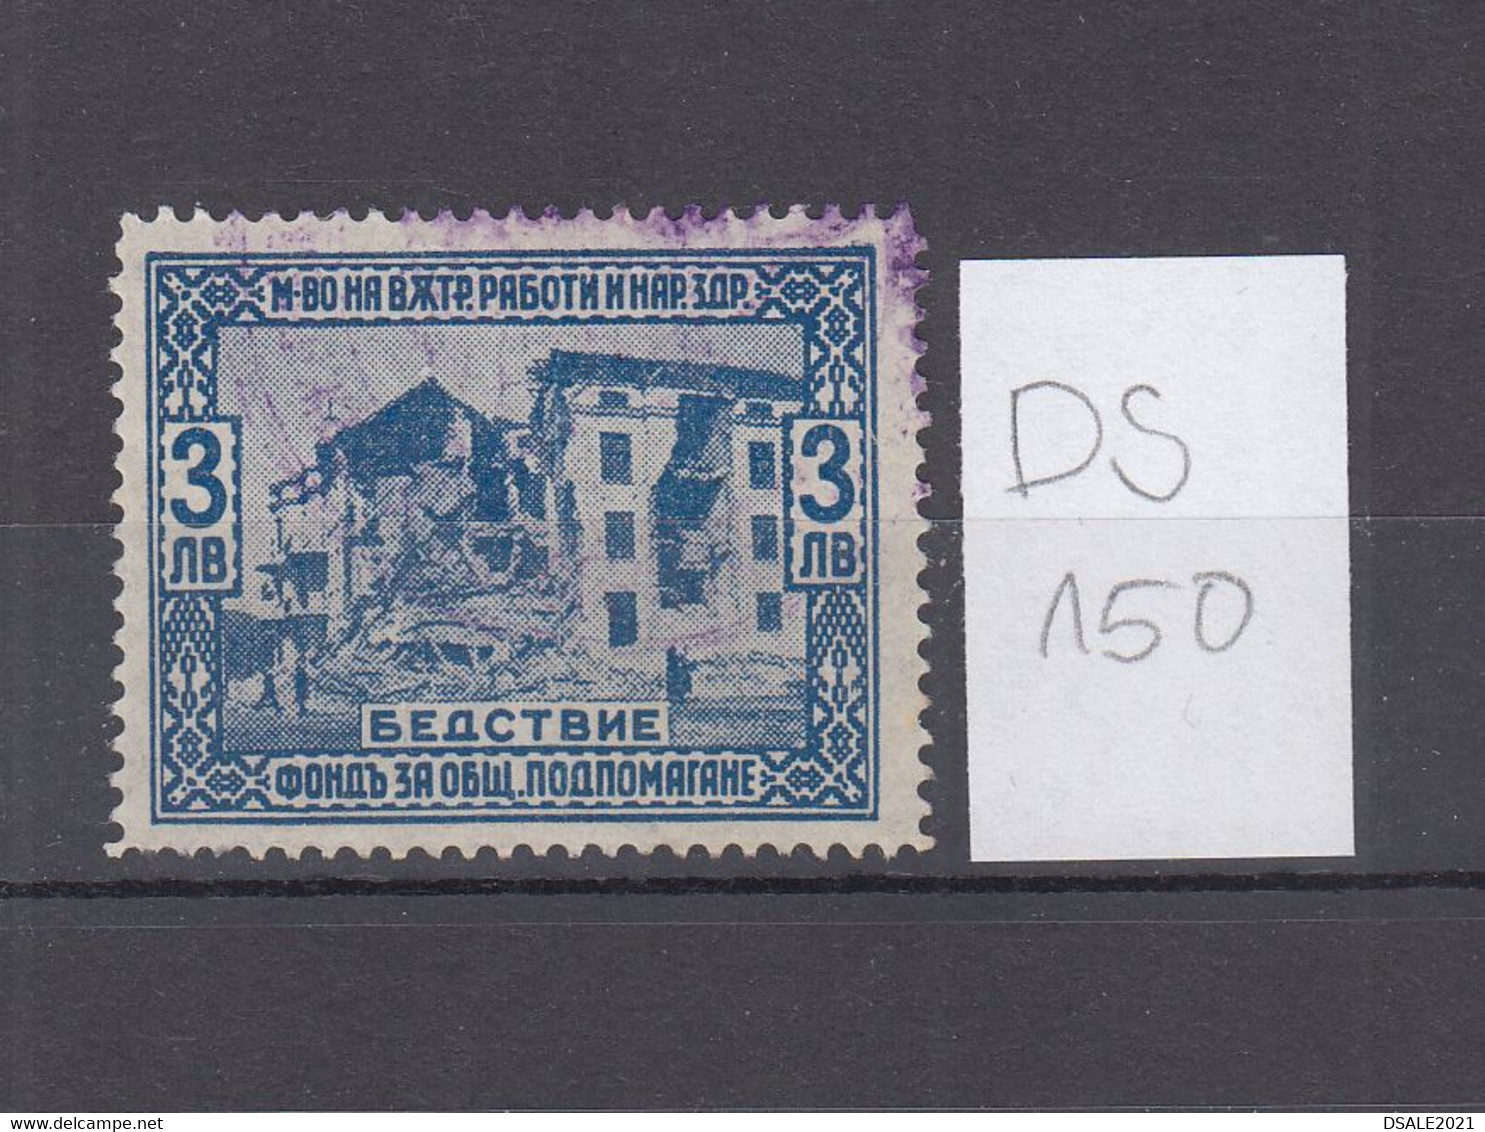 Bulgaria Bulgarie Bulgarije 1930s Disaster Fund 3Lv. Fiscal Revenue Stamp Bulgarian Revenues (ds150) - Francobolli Di Servizio